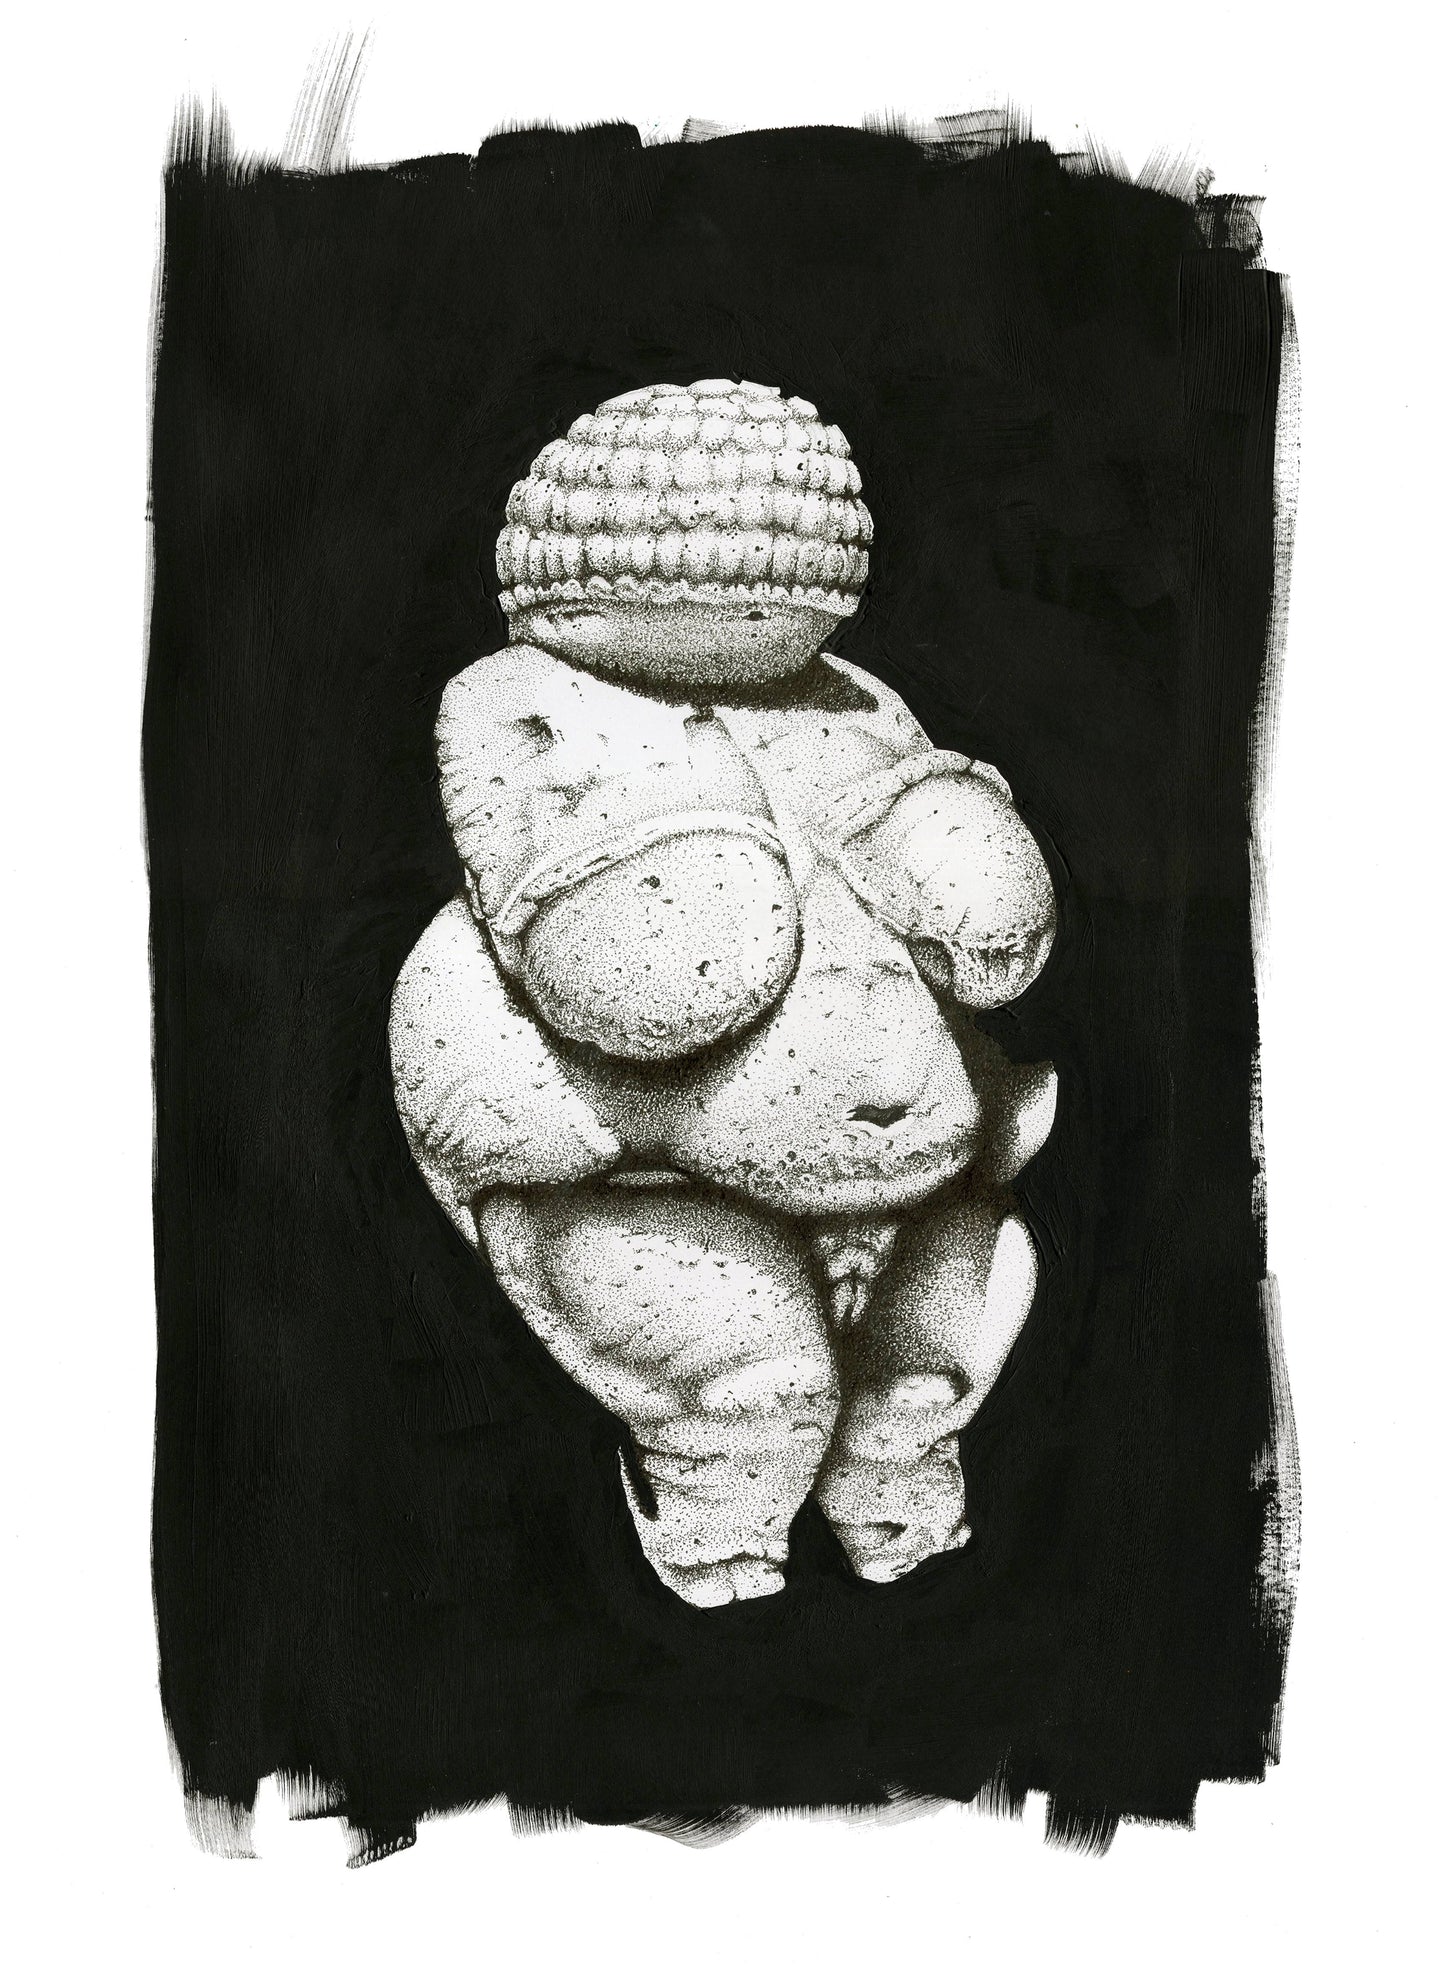 Willendorf